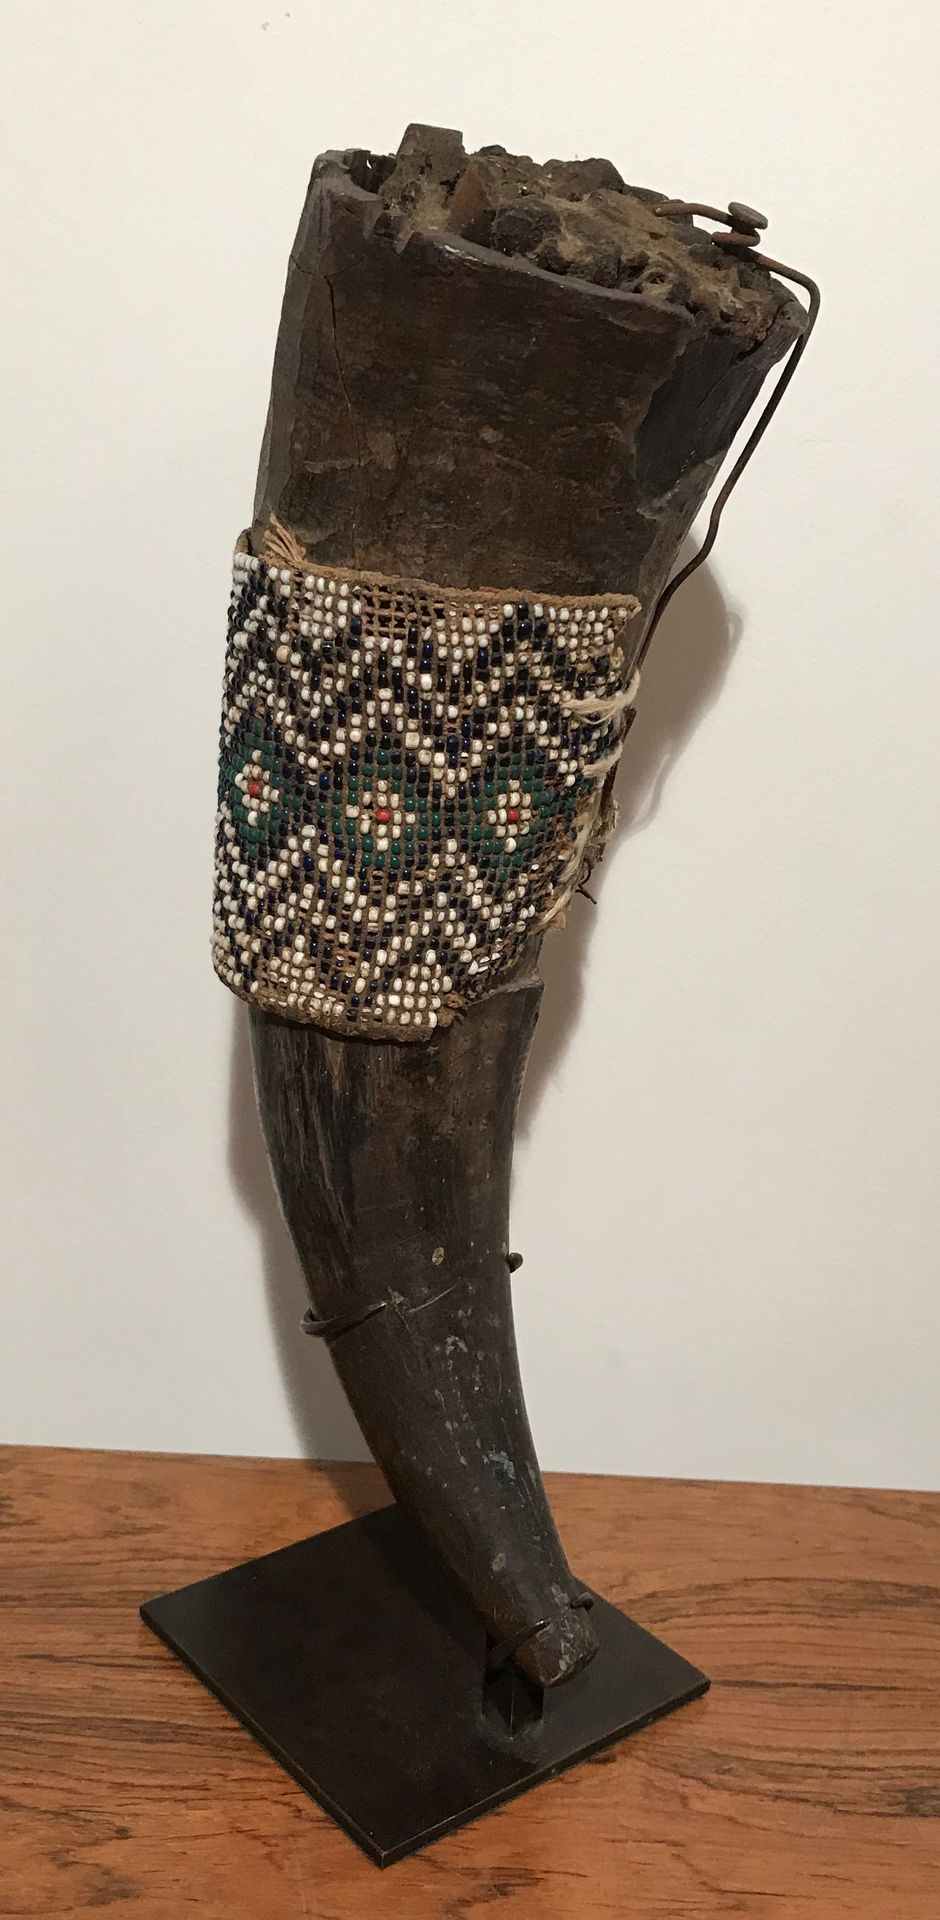 Null 癖好角装饰有损坏的珠饰。马达加斯加：
高：27厘米。